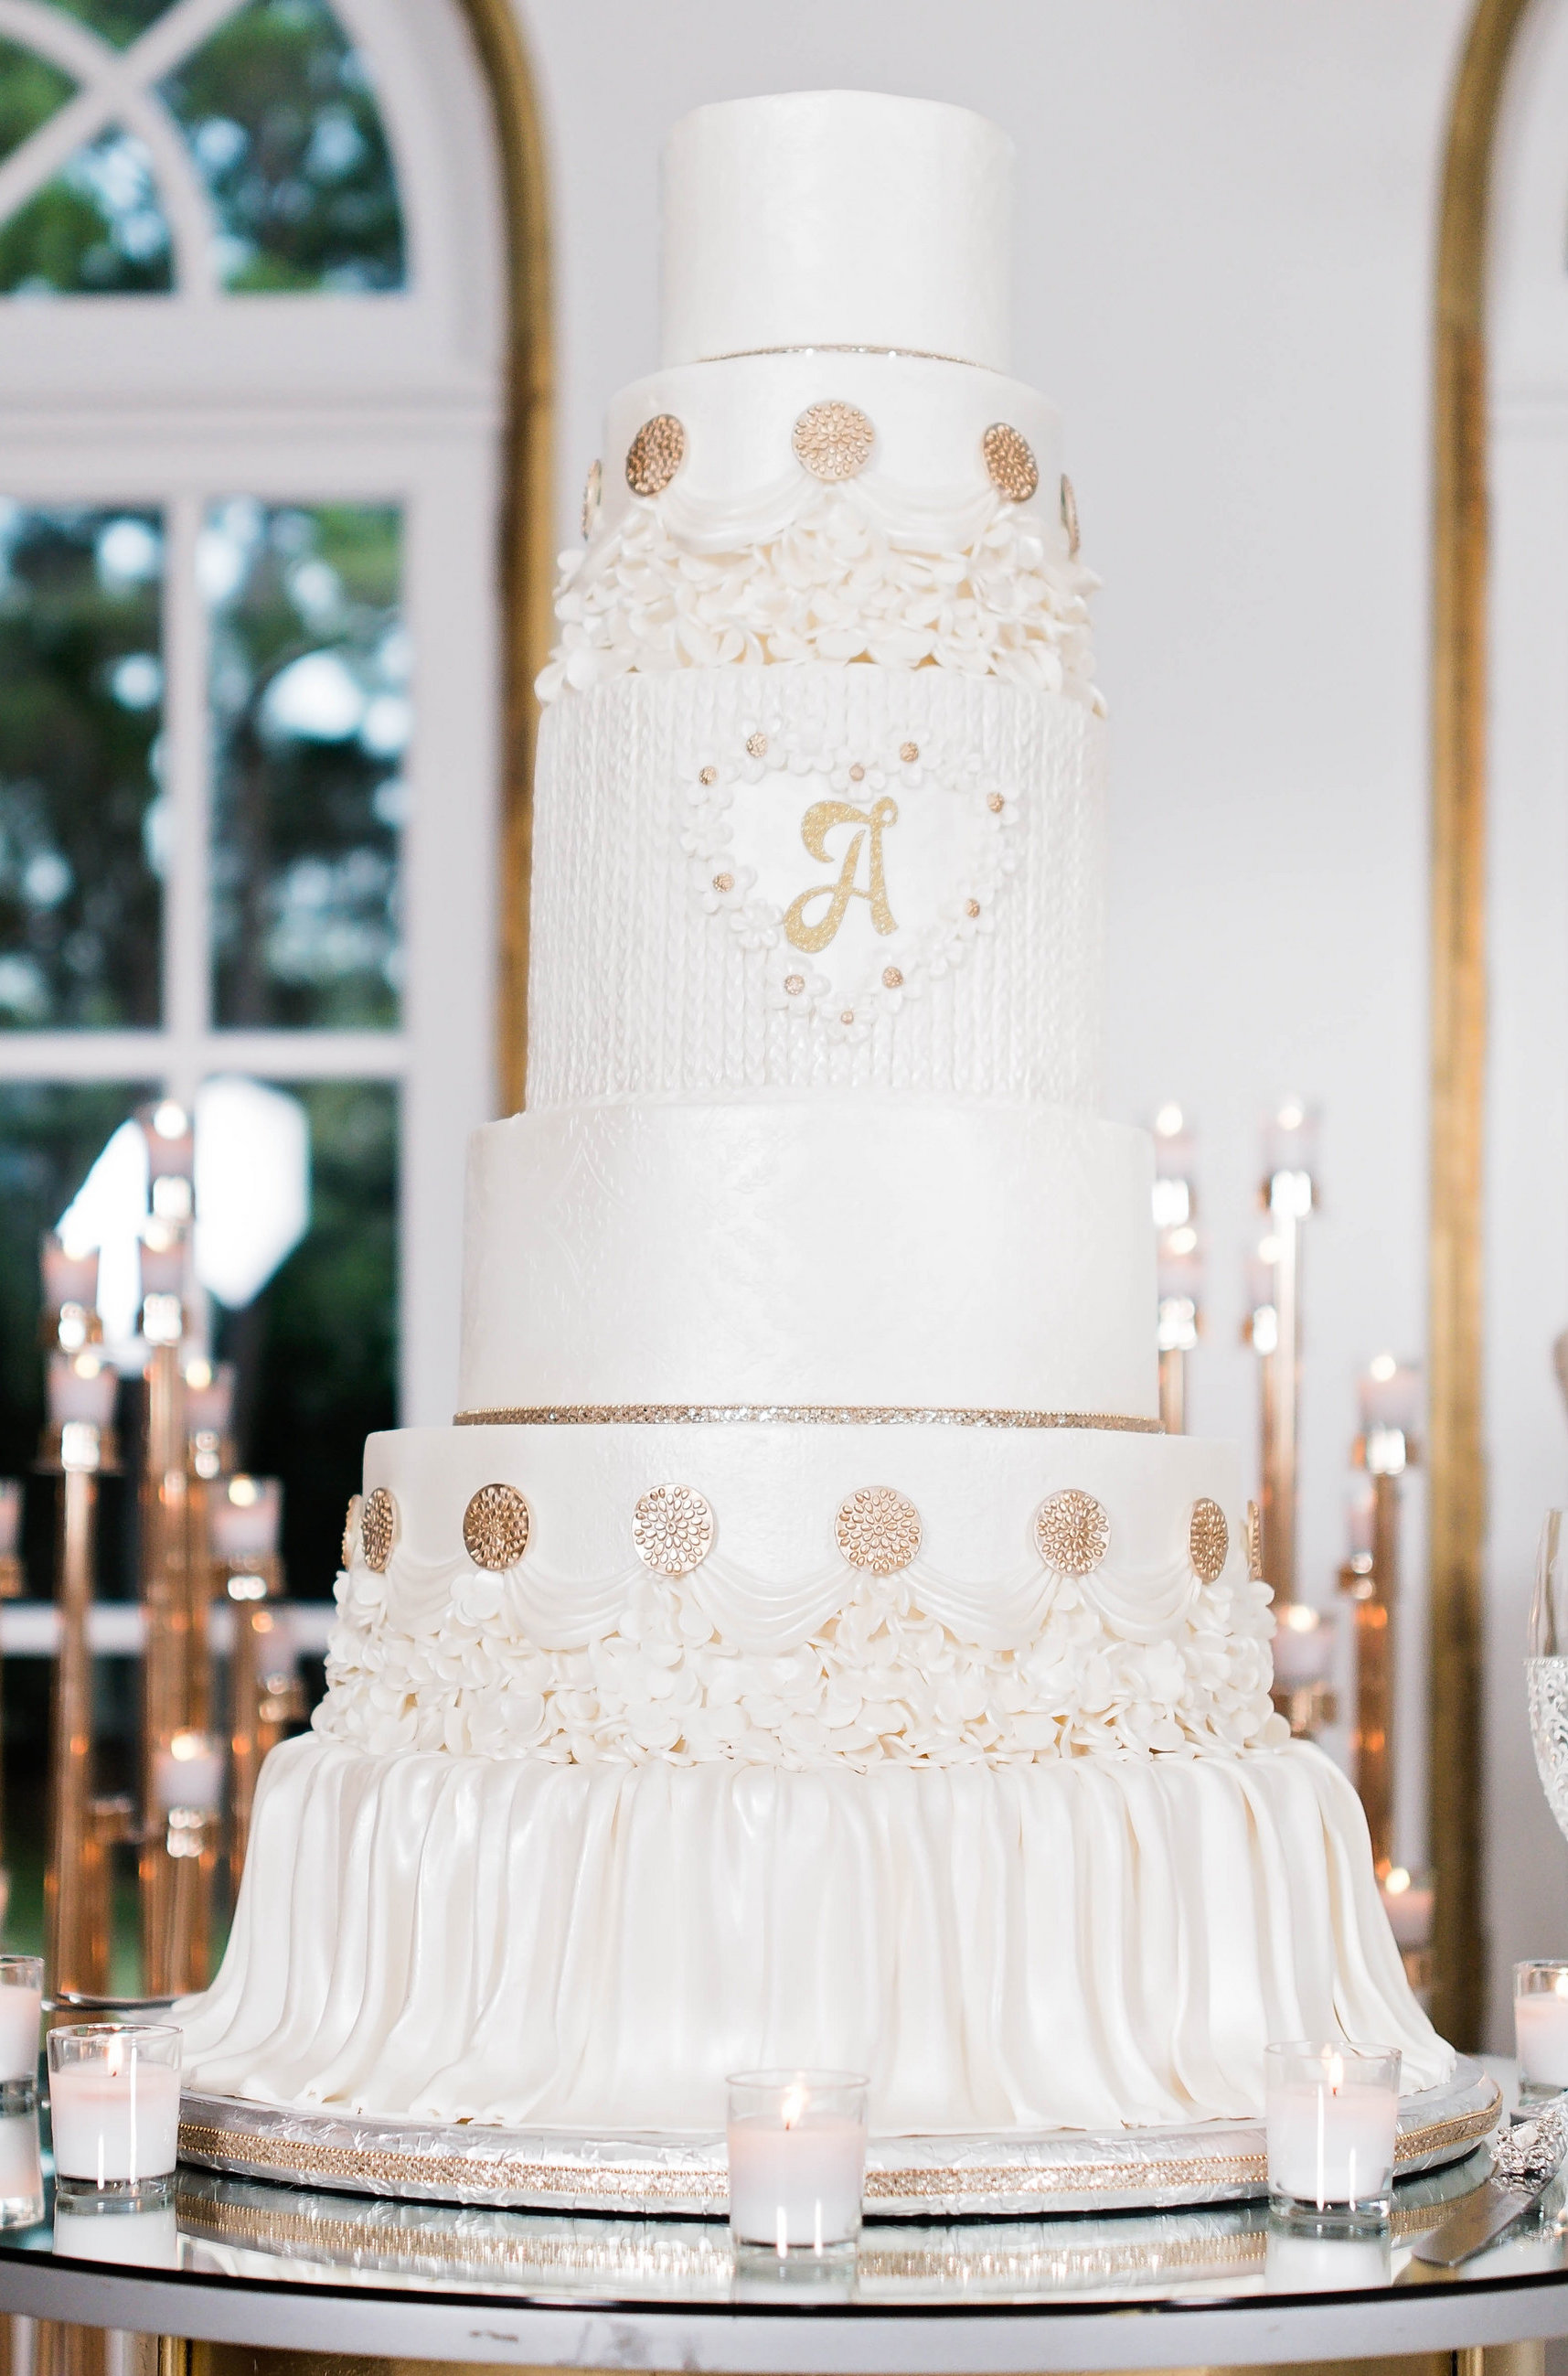 White and gold opulent wedding cake - Photography: Pharris Photos